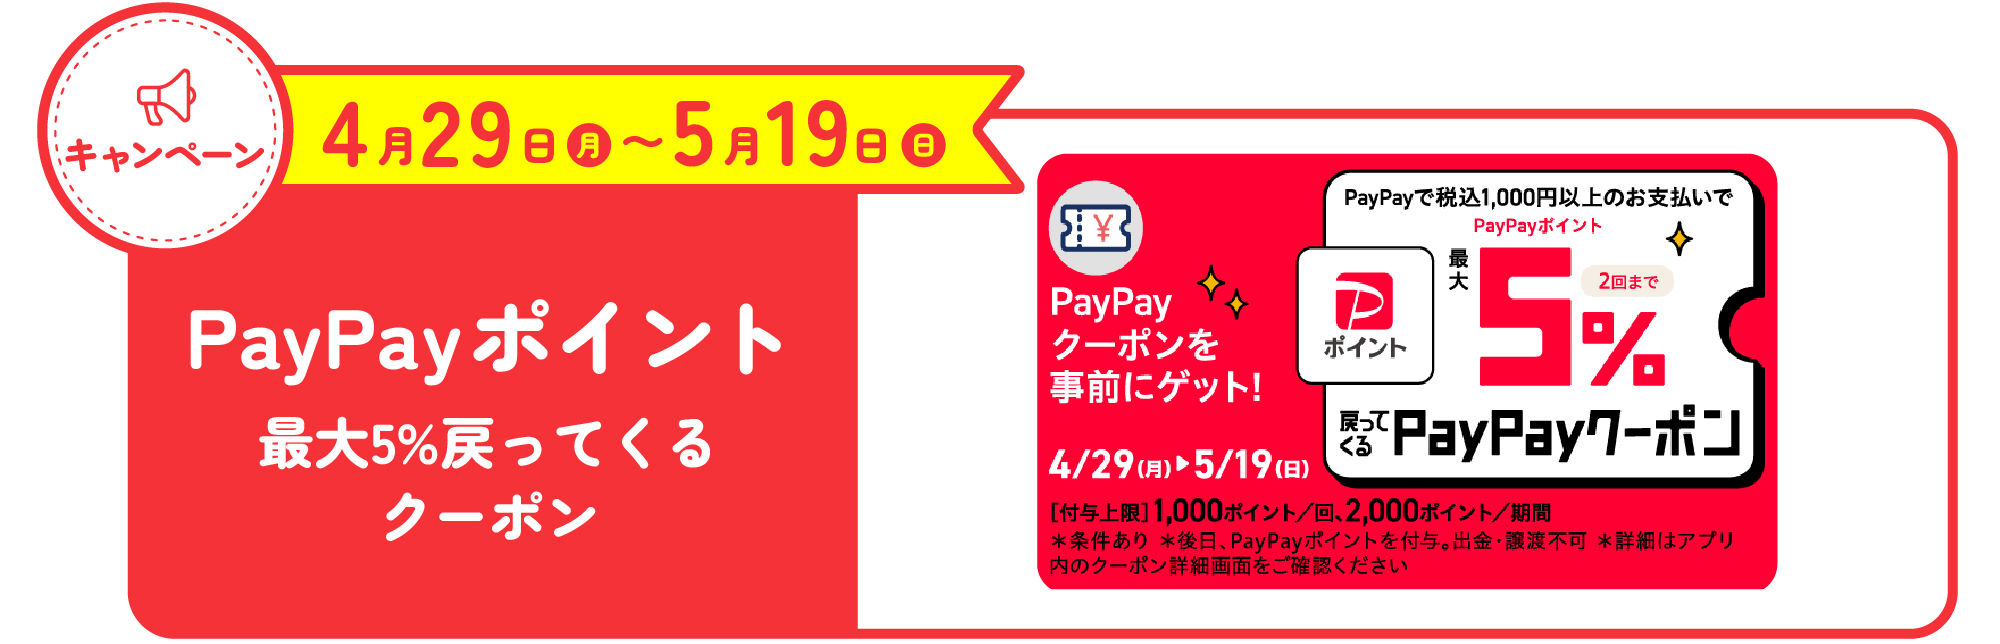 PayPay Softbankユーザー限定 最大30%還元